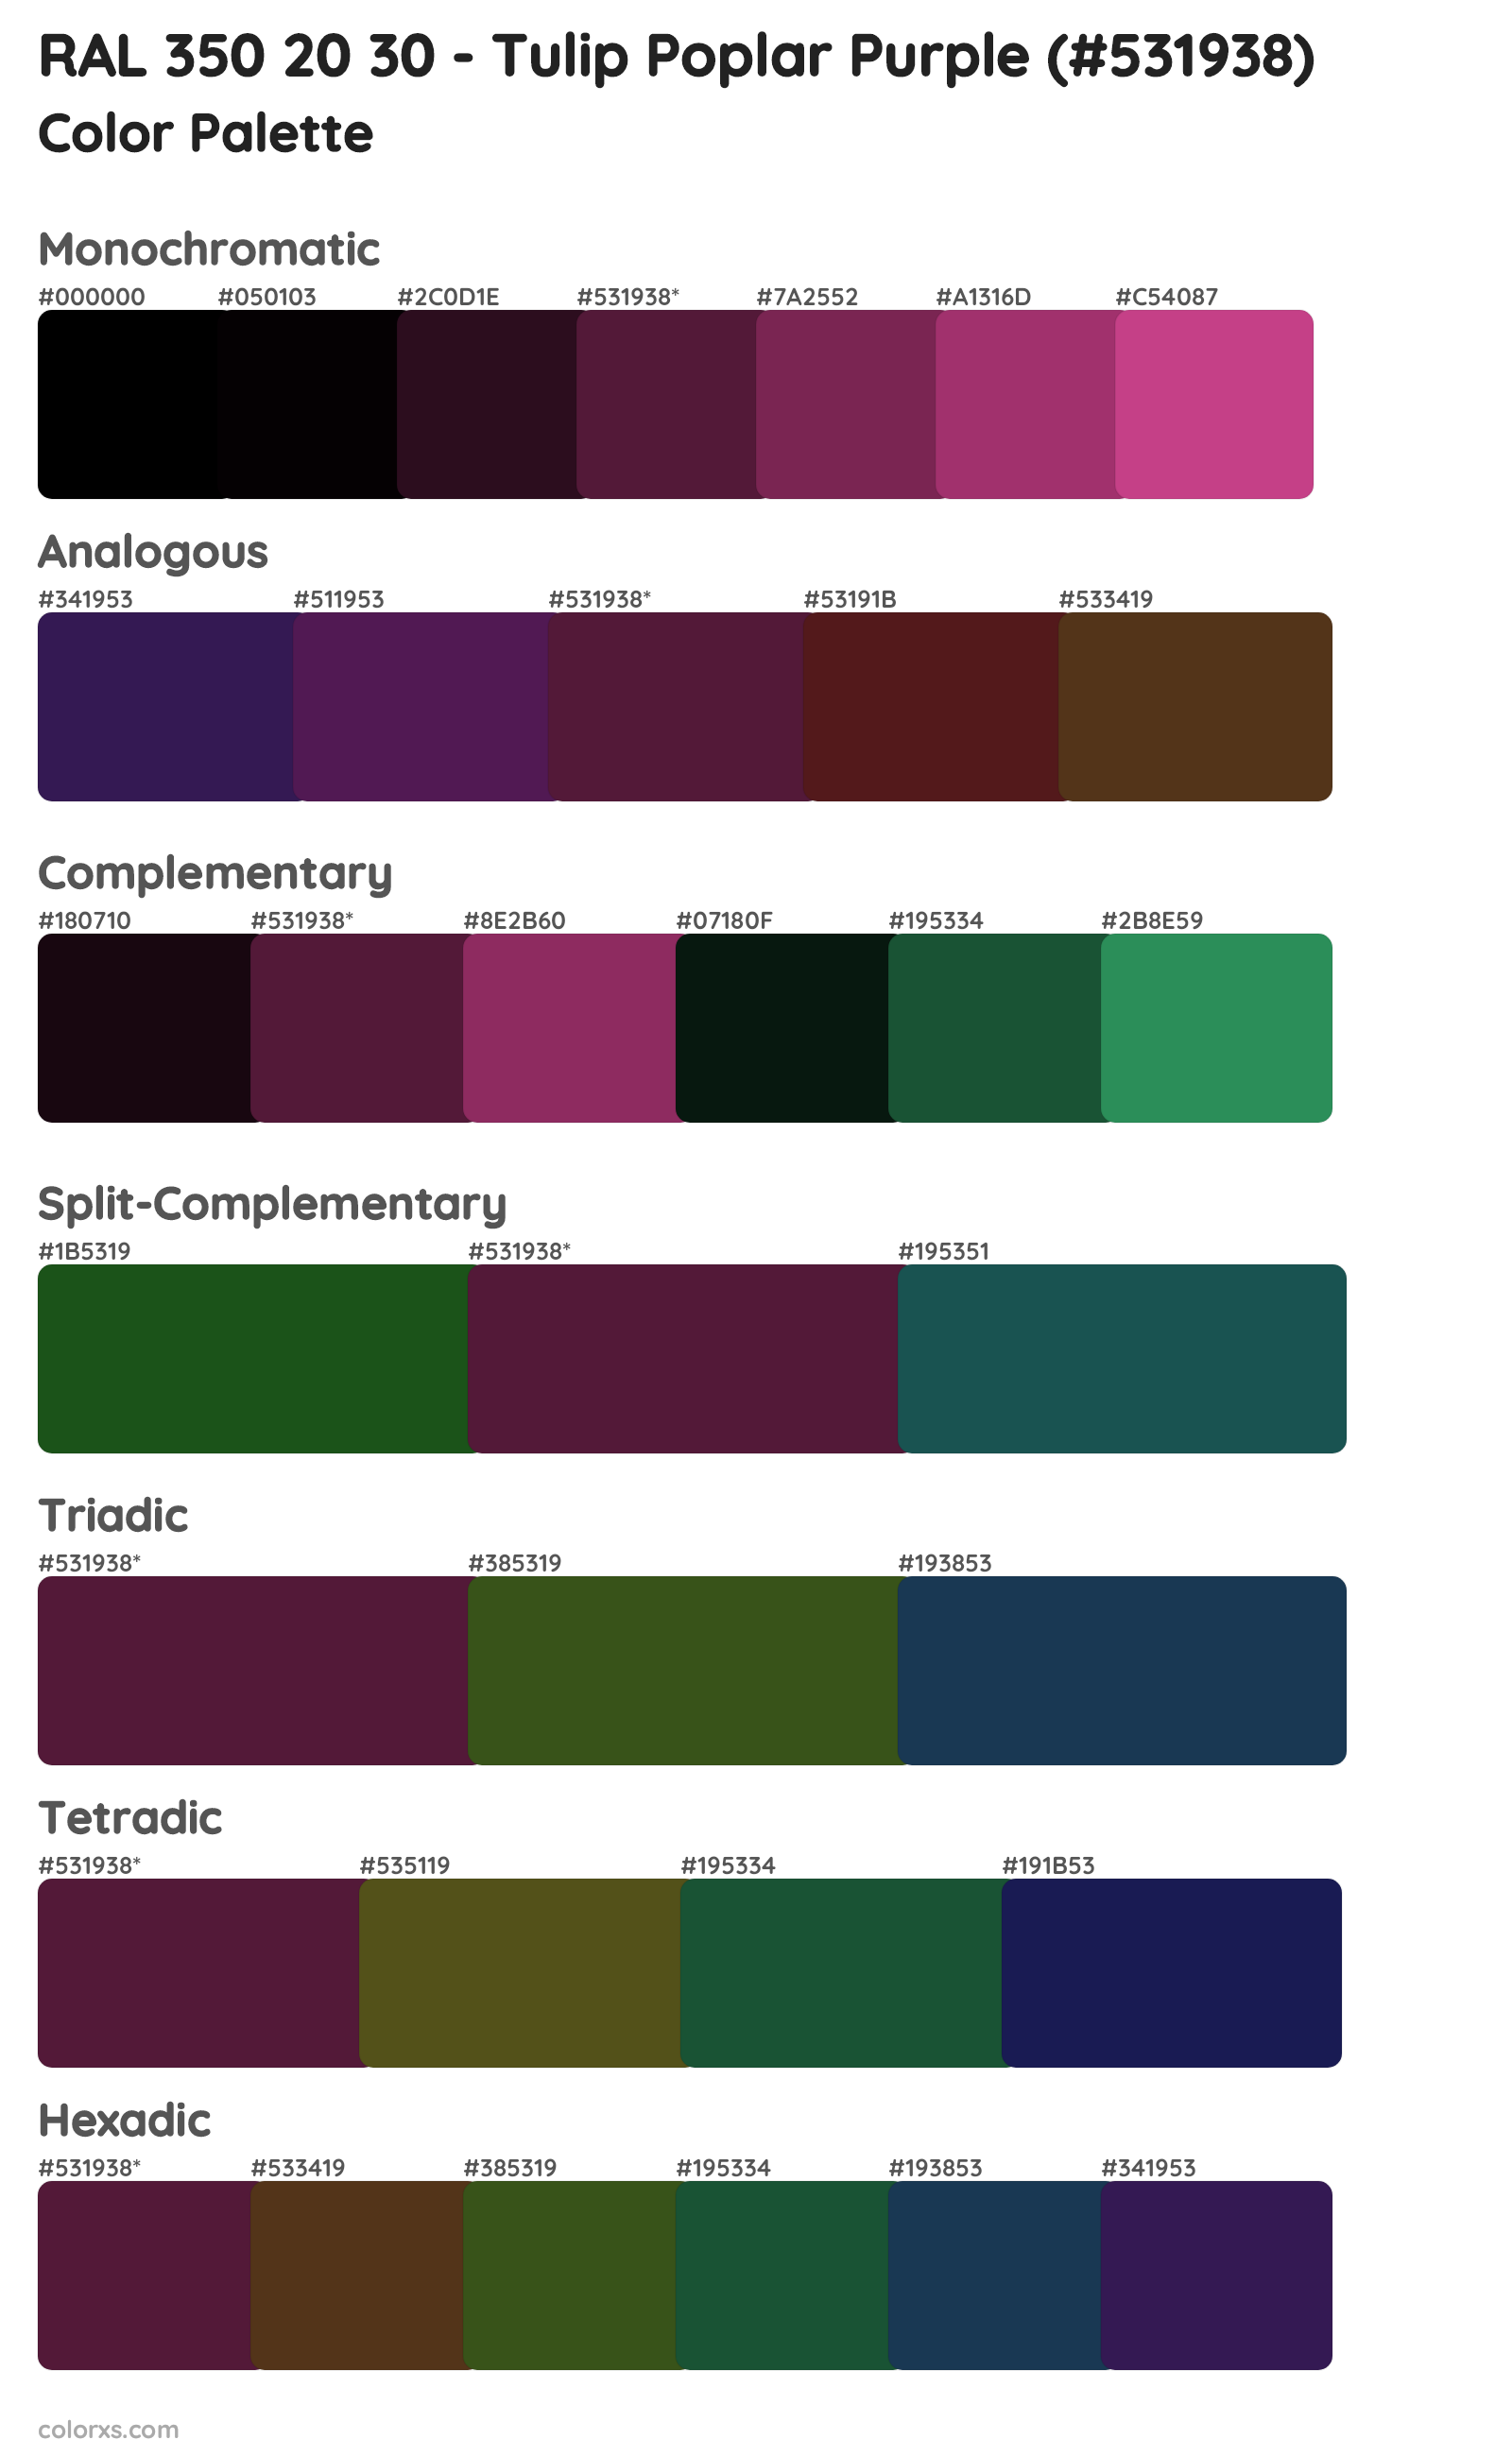 RAL 350 20 30 - Tulip Poplar Purple Color Scheme Palettes